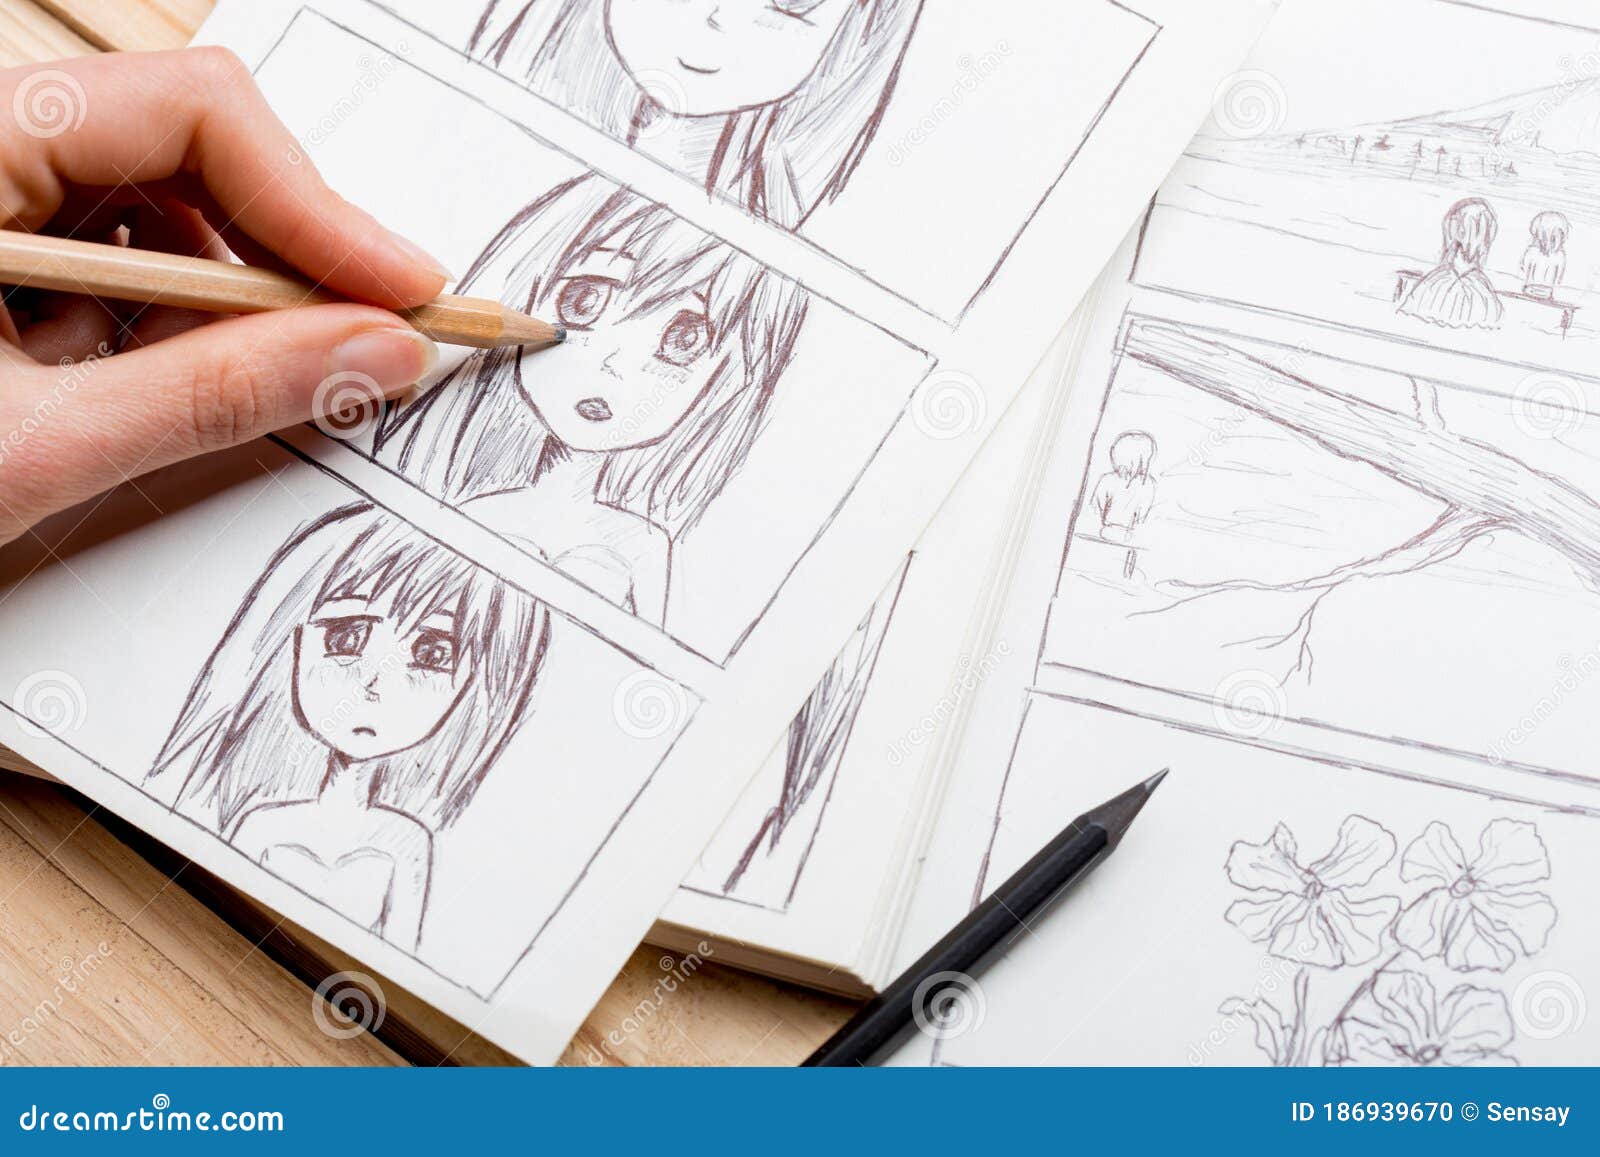 Anime drawing  Anime drawings Anime canvas art Book art drawings